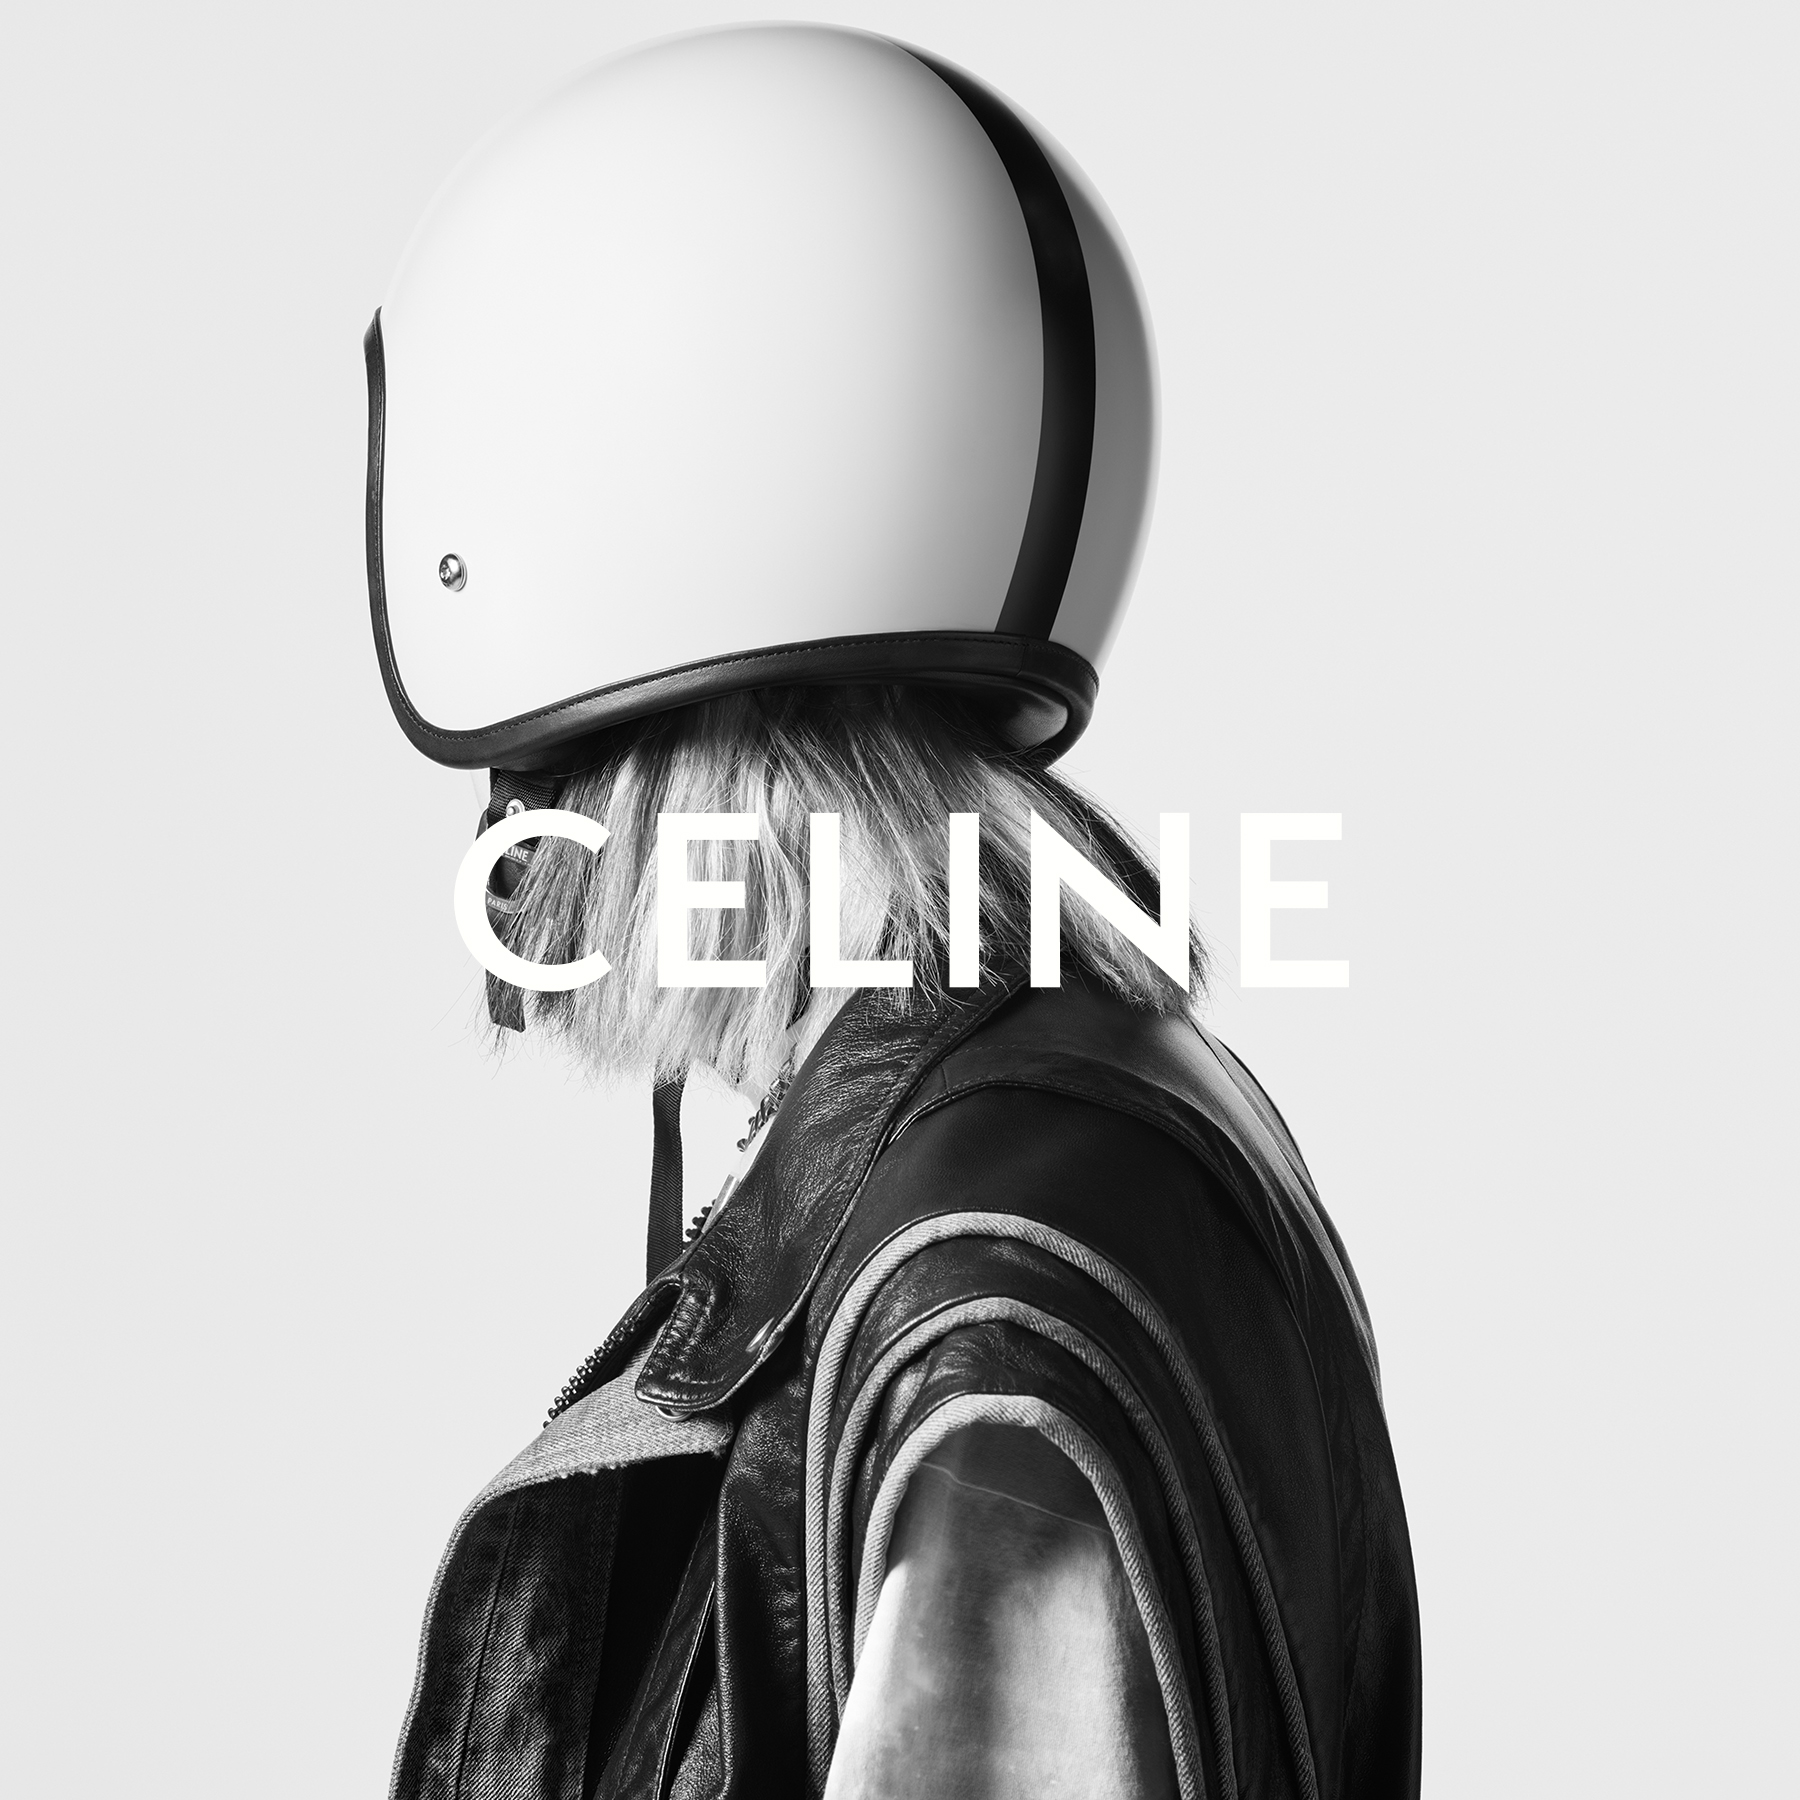 Celine Homme